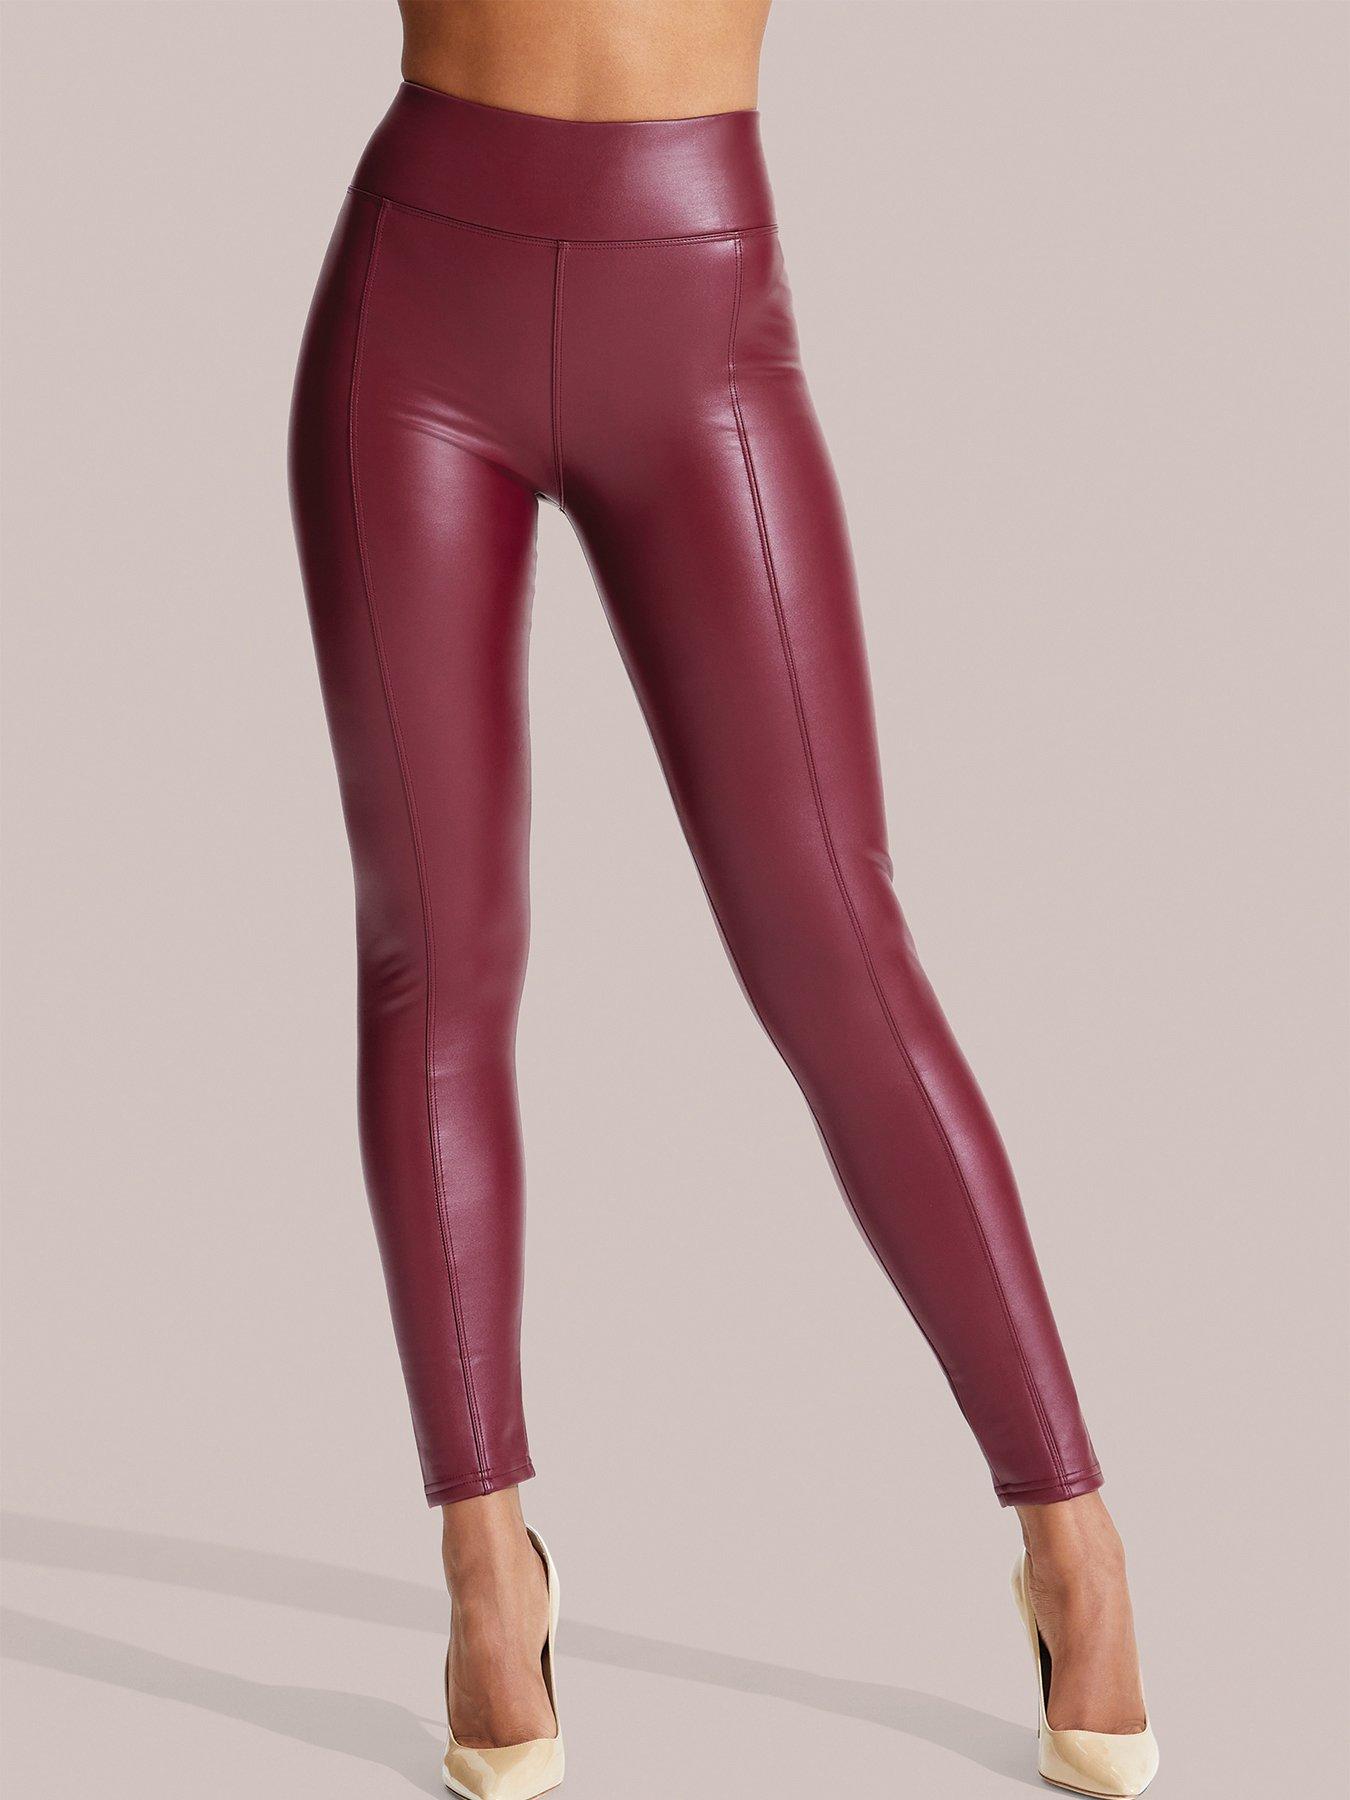 Ann Summers Bodywear Apparel The PU Seamed Leggings - Bright Red | very ...